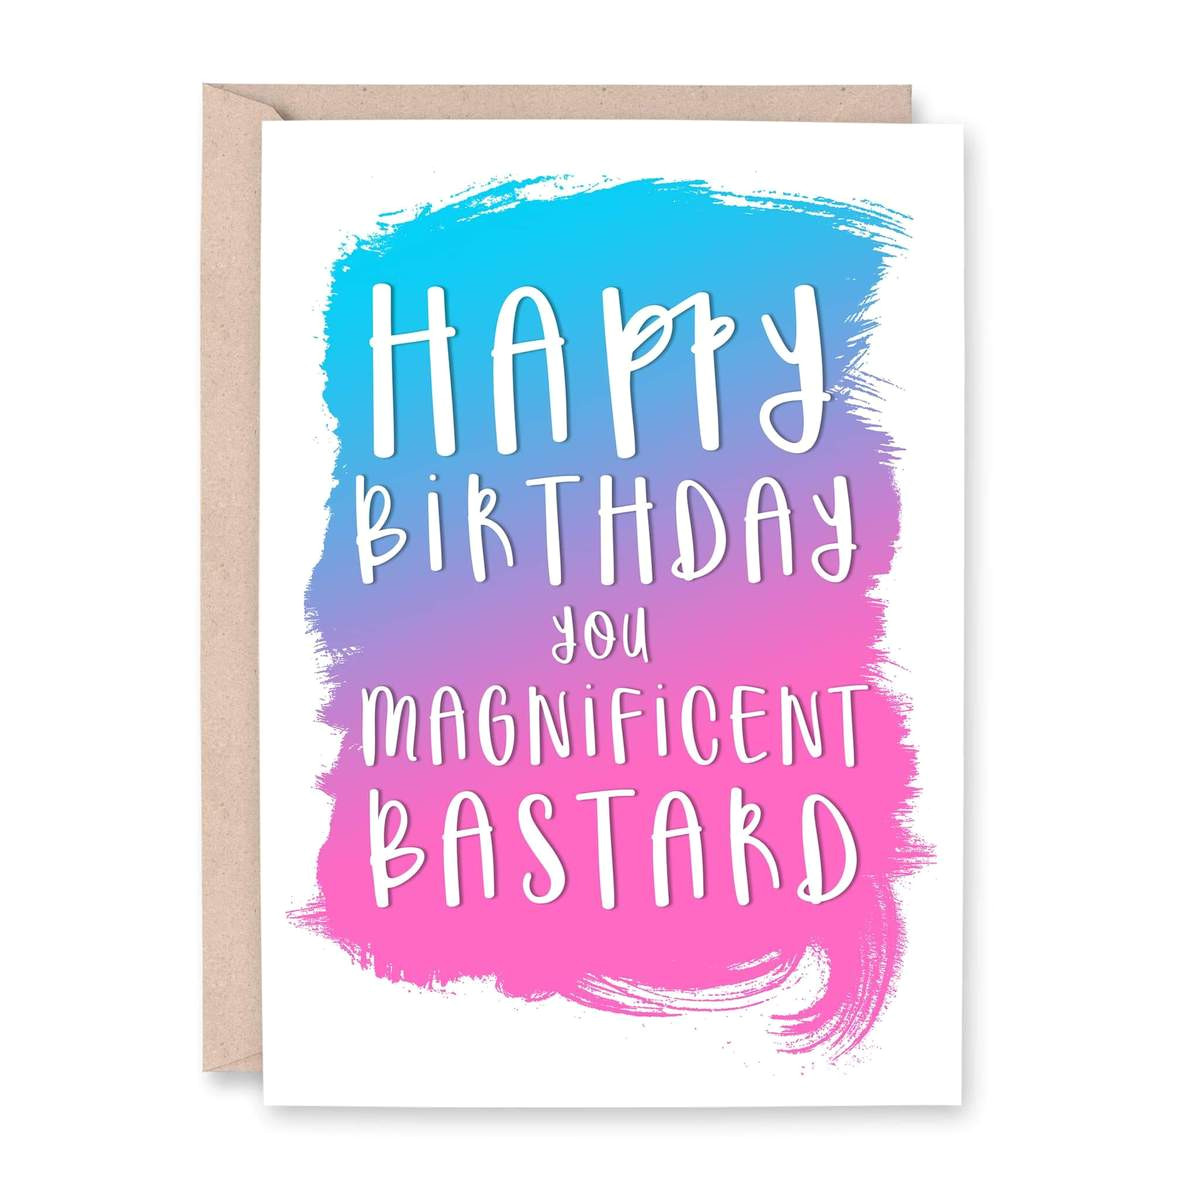 happy birthday magnificent bastard card 1200x1200 jpg